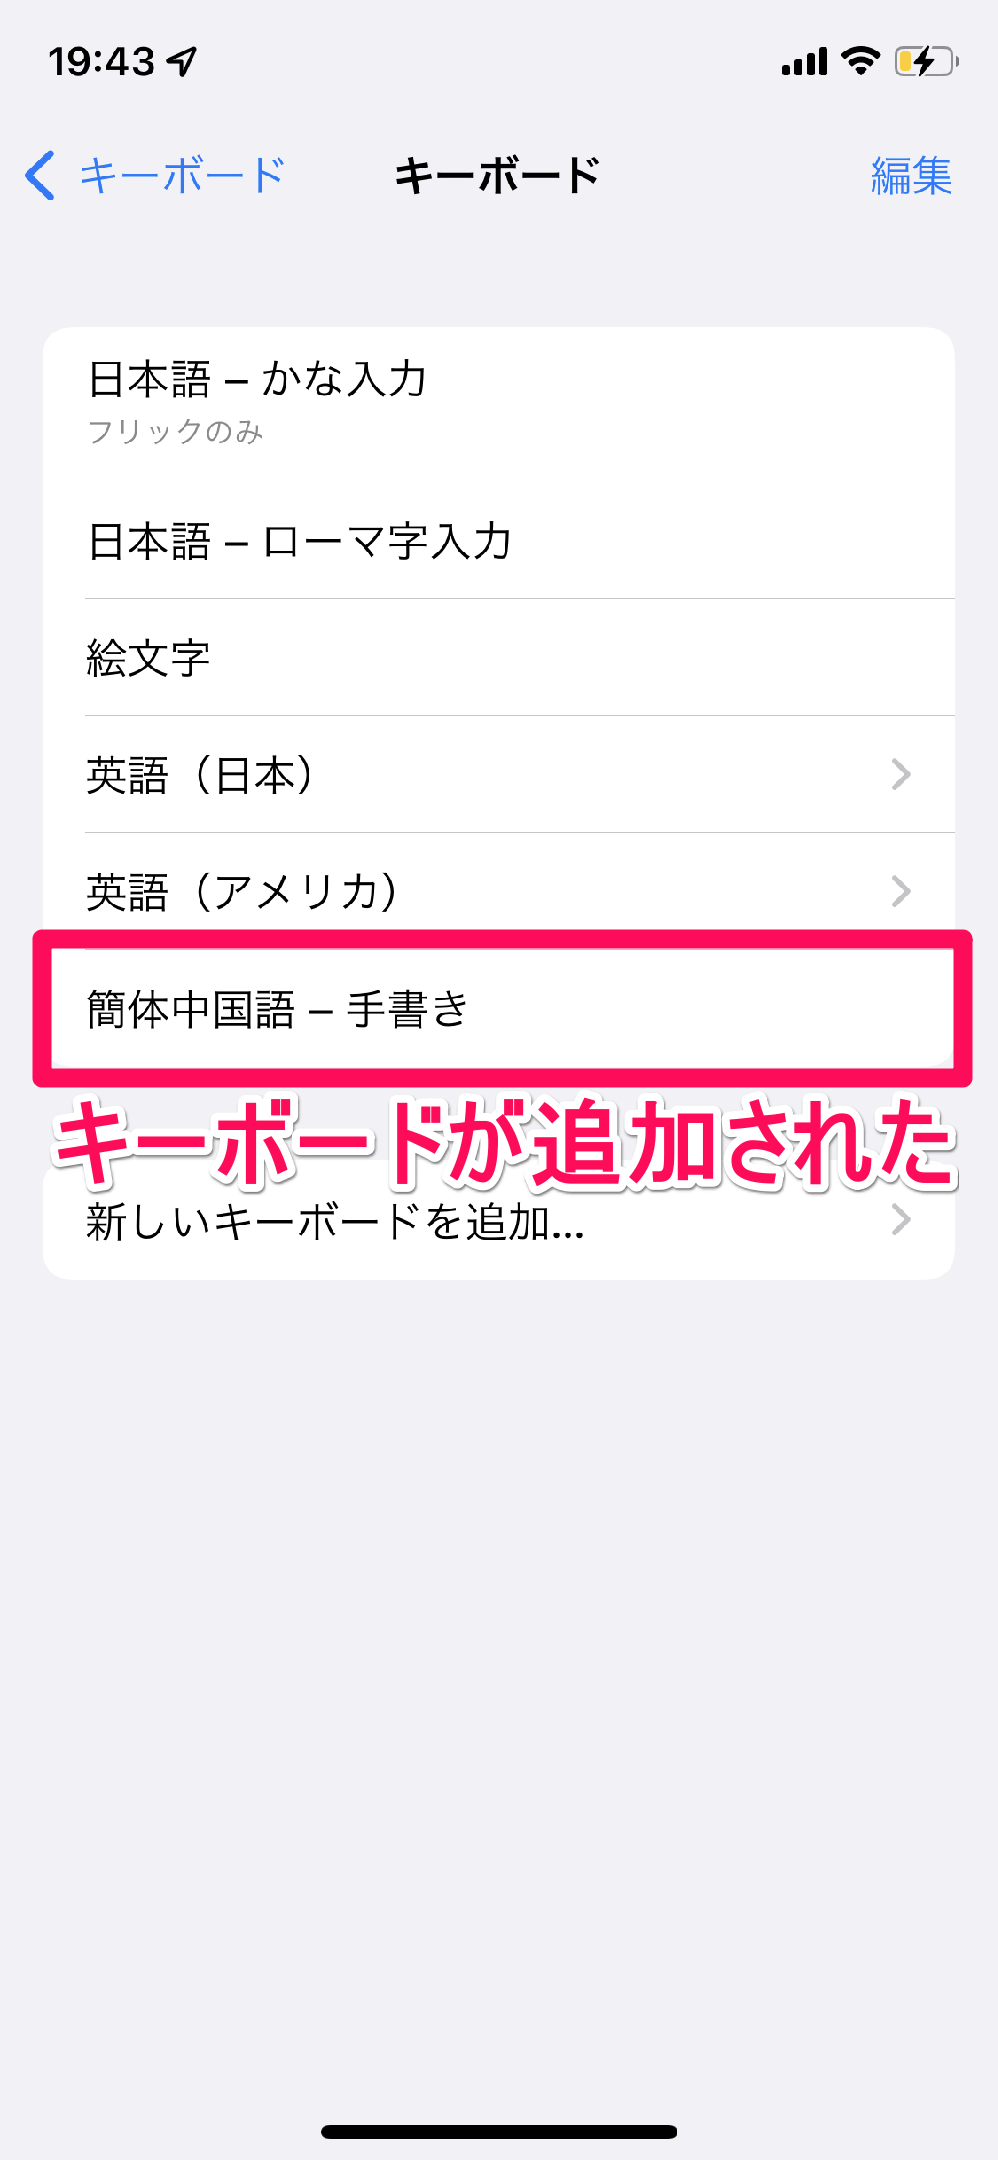 iPhoneで漢字を手書き入力する方法。標準機能だけでできる！